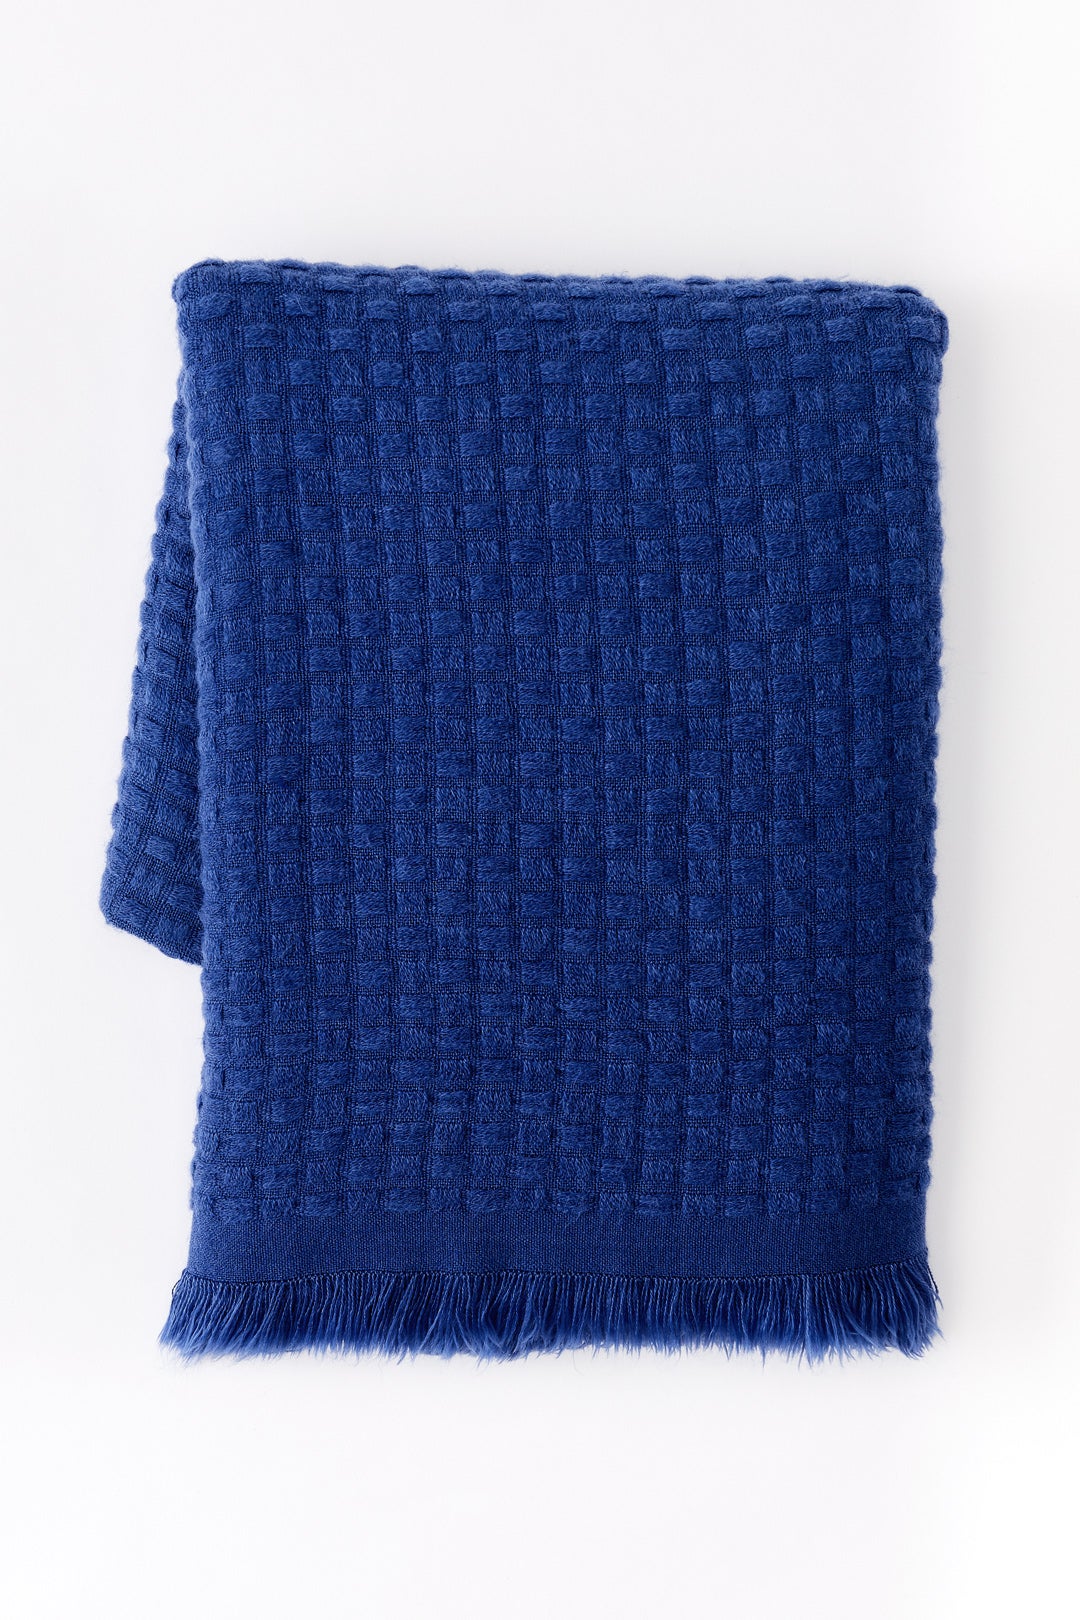 silo-1234567-waffle-weave-throw-landscape-blue-su19-d1-front-009_71